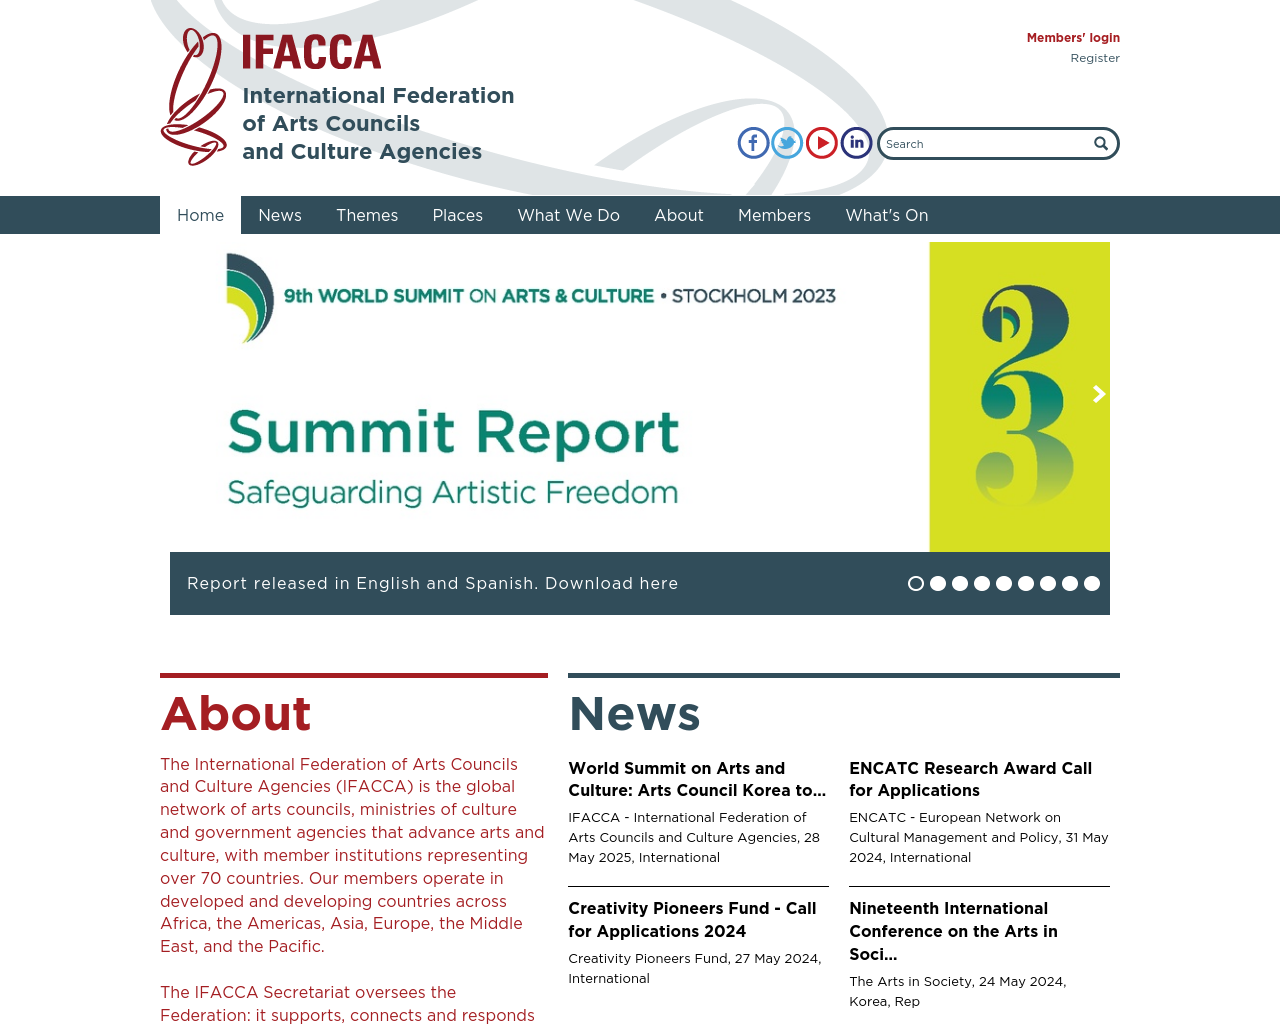 ifacca.org